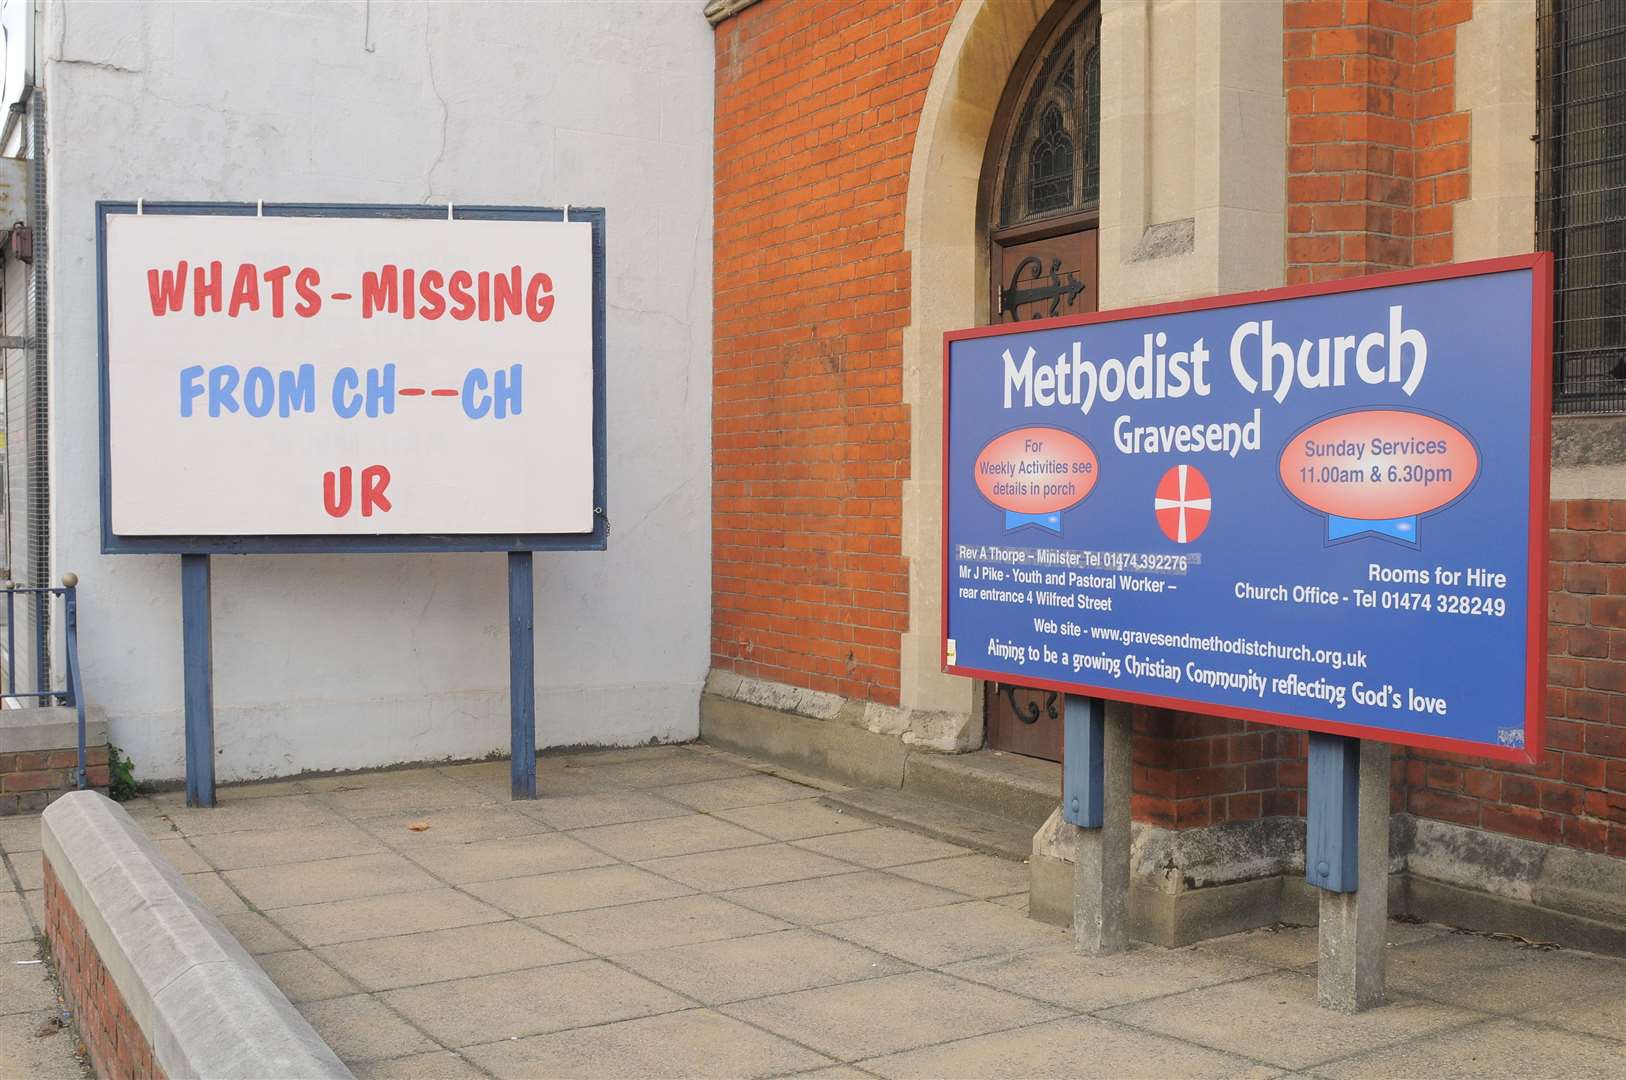 Gravesend Methodist Church is located in Milton Road Picture: Steve Crispe